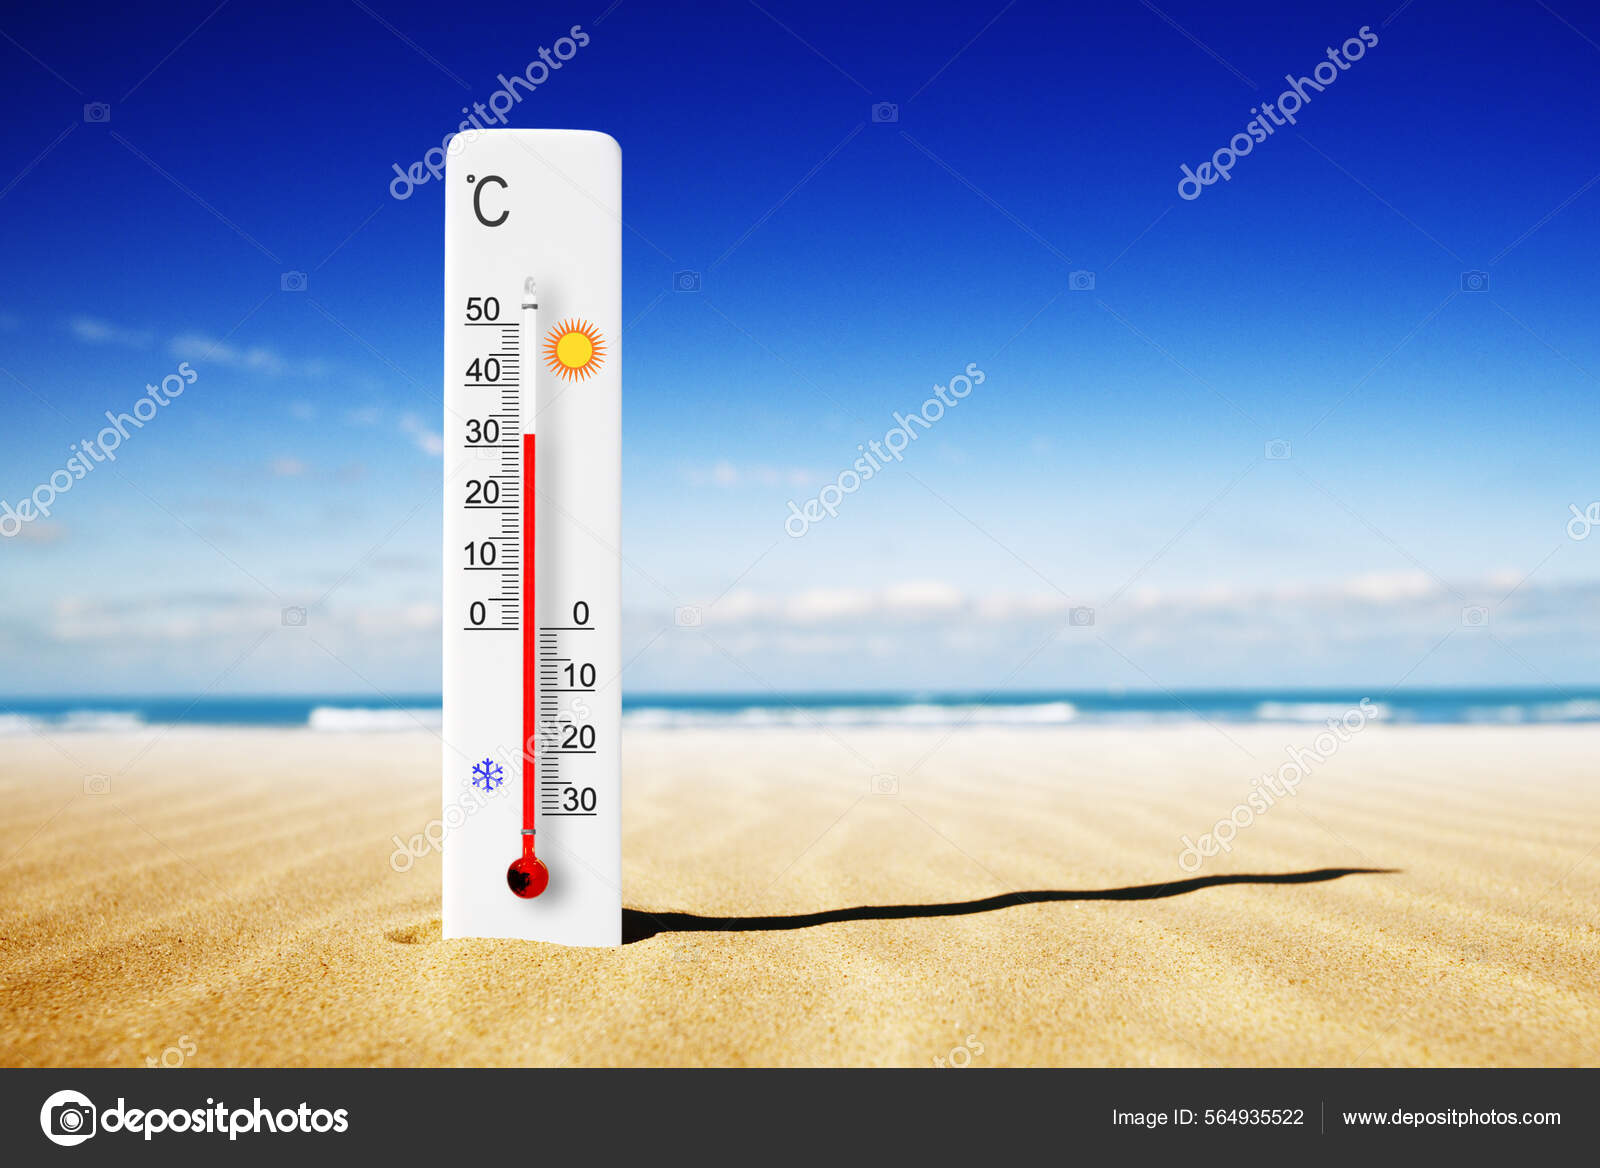 https://st.depositphotos.com/64955384/56493/i/1600/depositphotos_564935522-stock-photo-hot-summer-day-celsius-scale.jpg